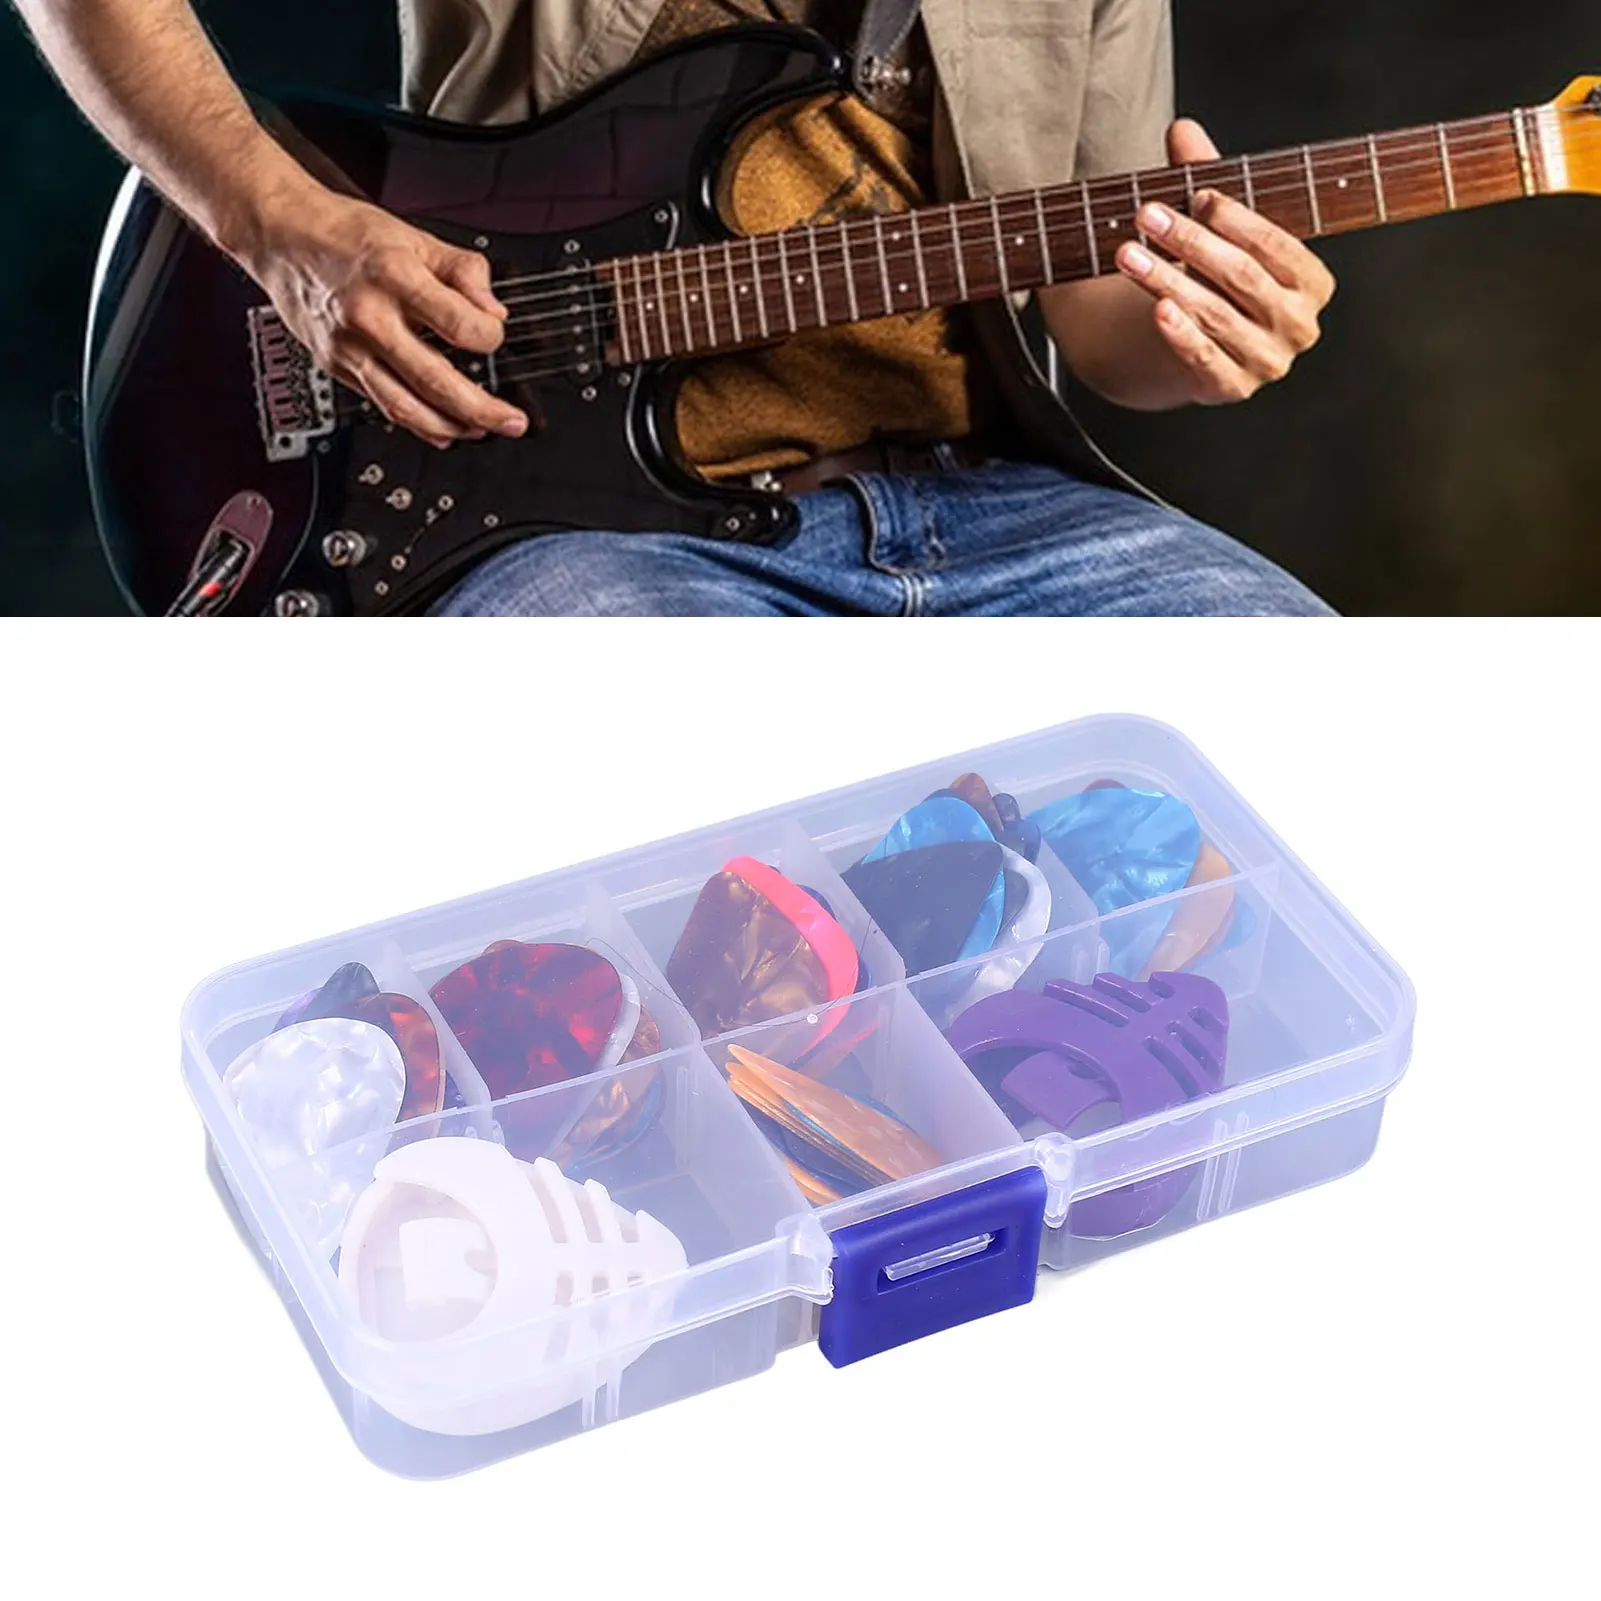 60 Adet Gitar Seçtikleri Renkli Selüloit Elektrik Akustik gitar Seçim Seti saklama kutusu